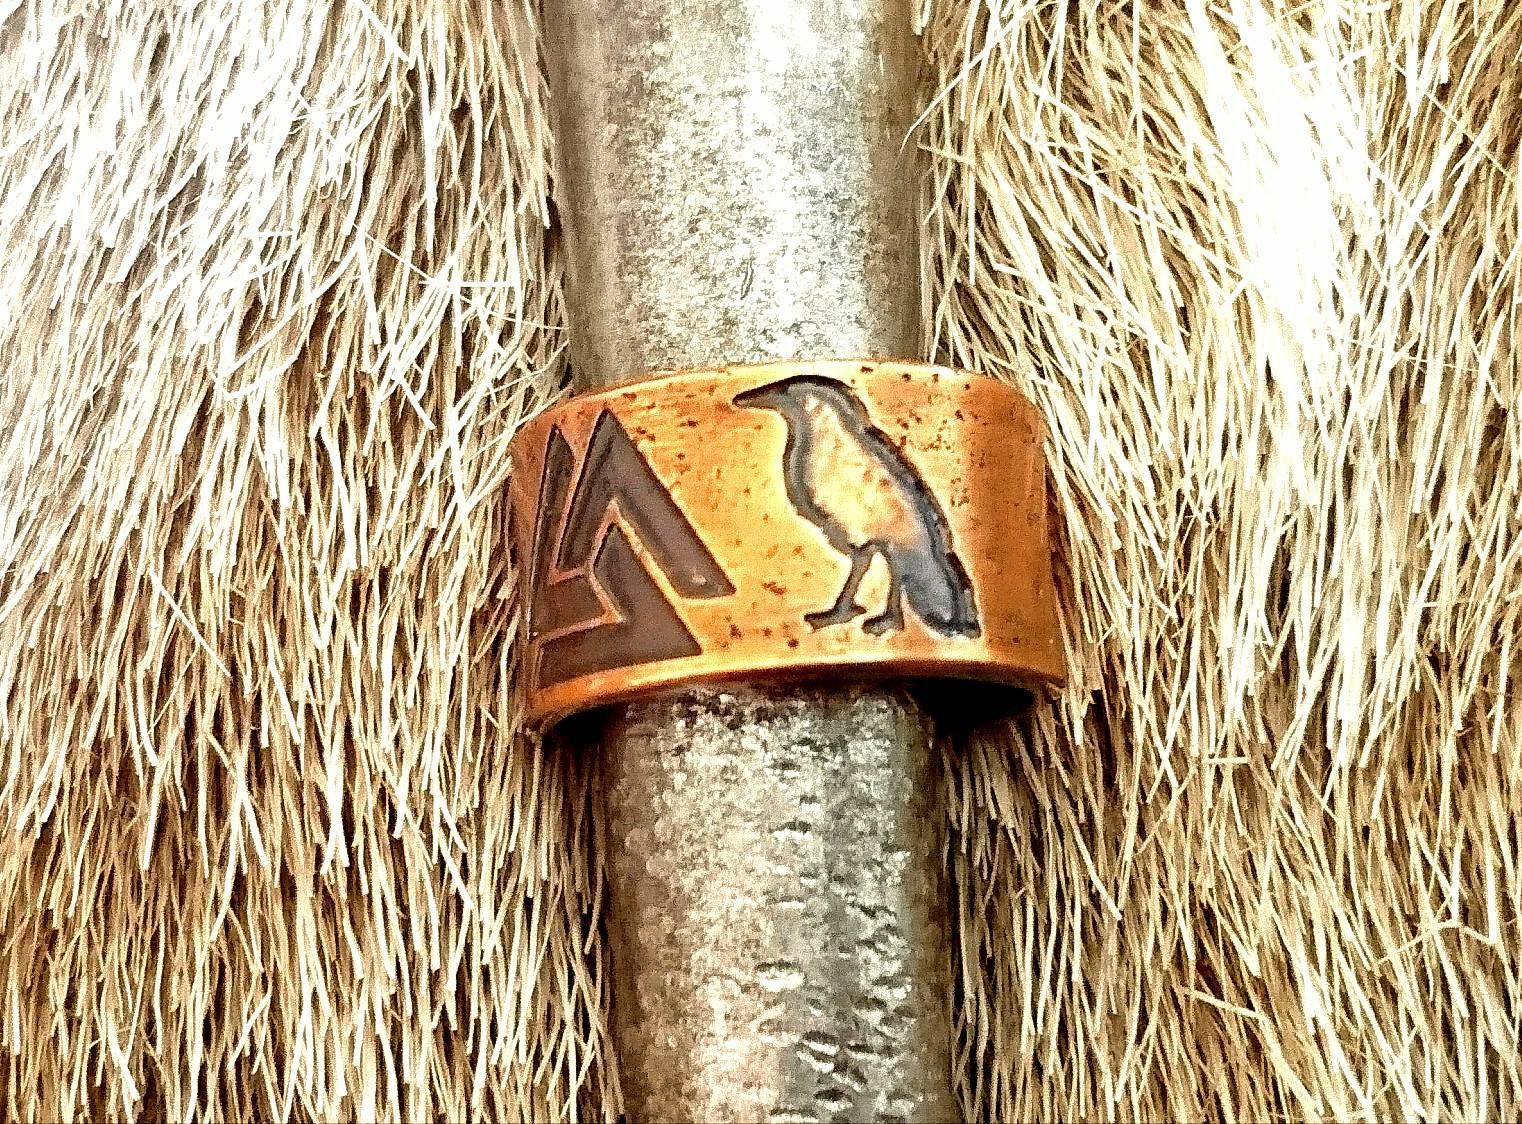 Norse Valknut Ring with Wolves (Geri and Freki) or Ravens (Hugin and Munin) Ring copper bronze brass viking wolf pagan heathen